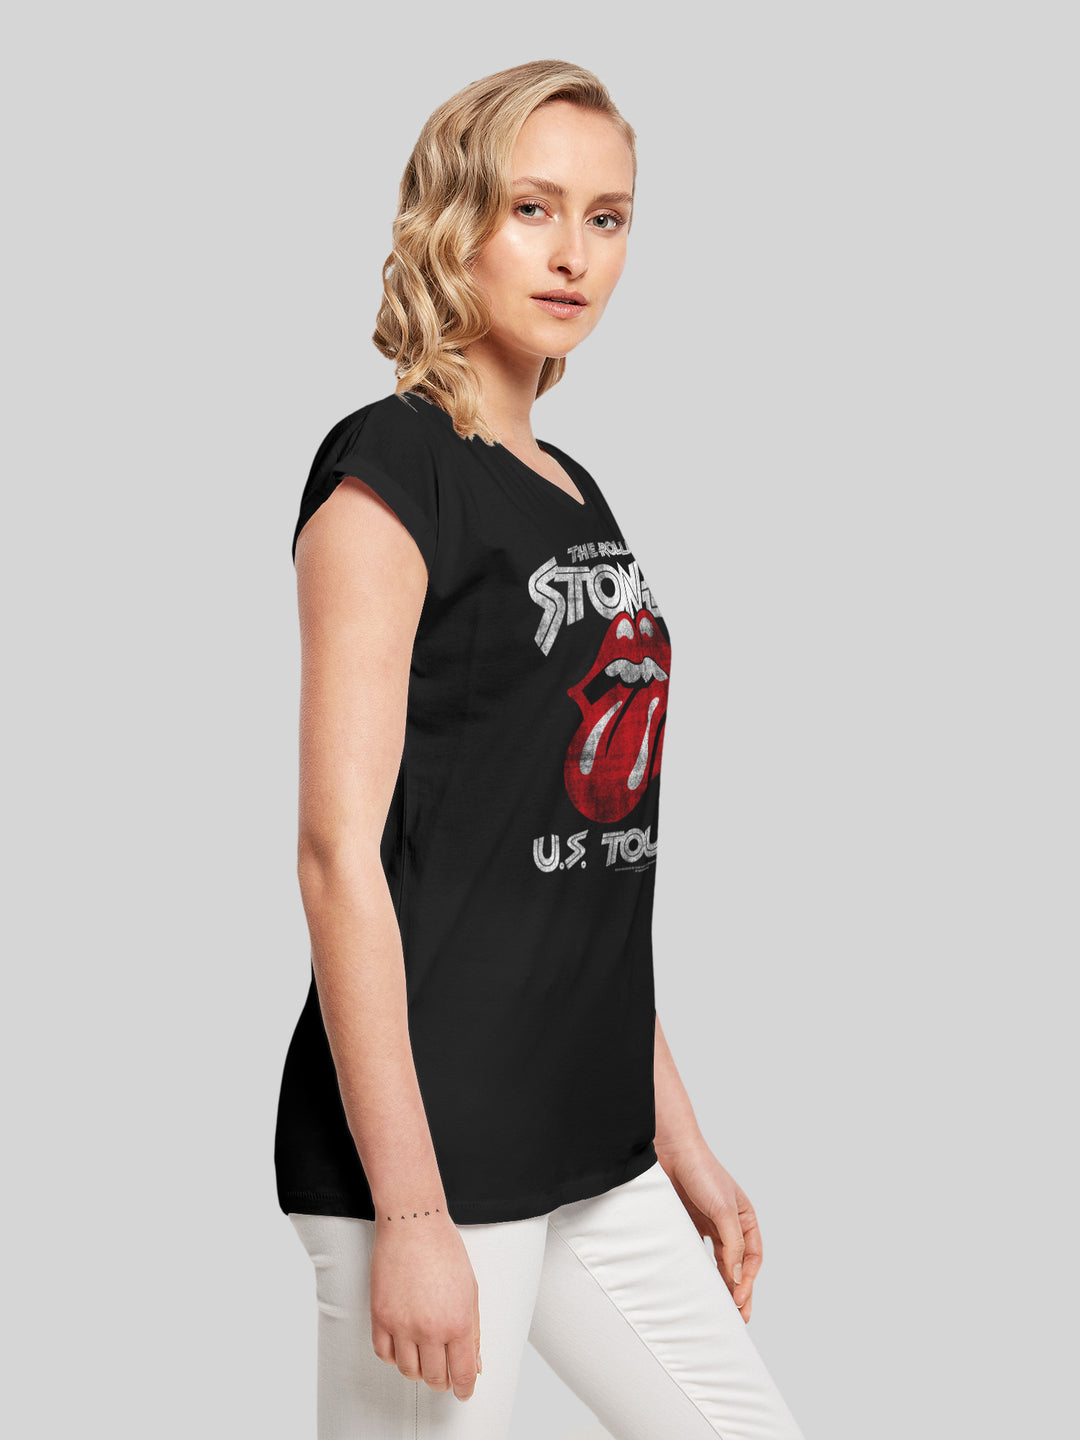 The Rolling Stones T-Shirt | US Tour '78 | Premium Short Sleeve Ladies Tee